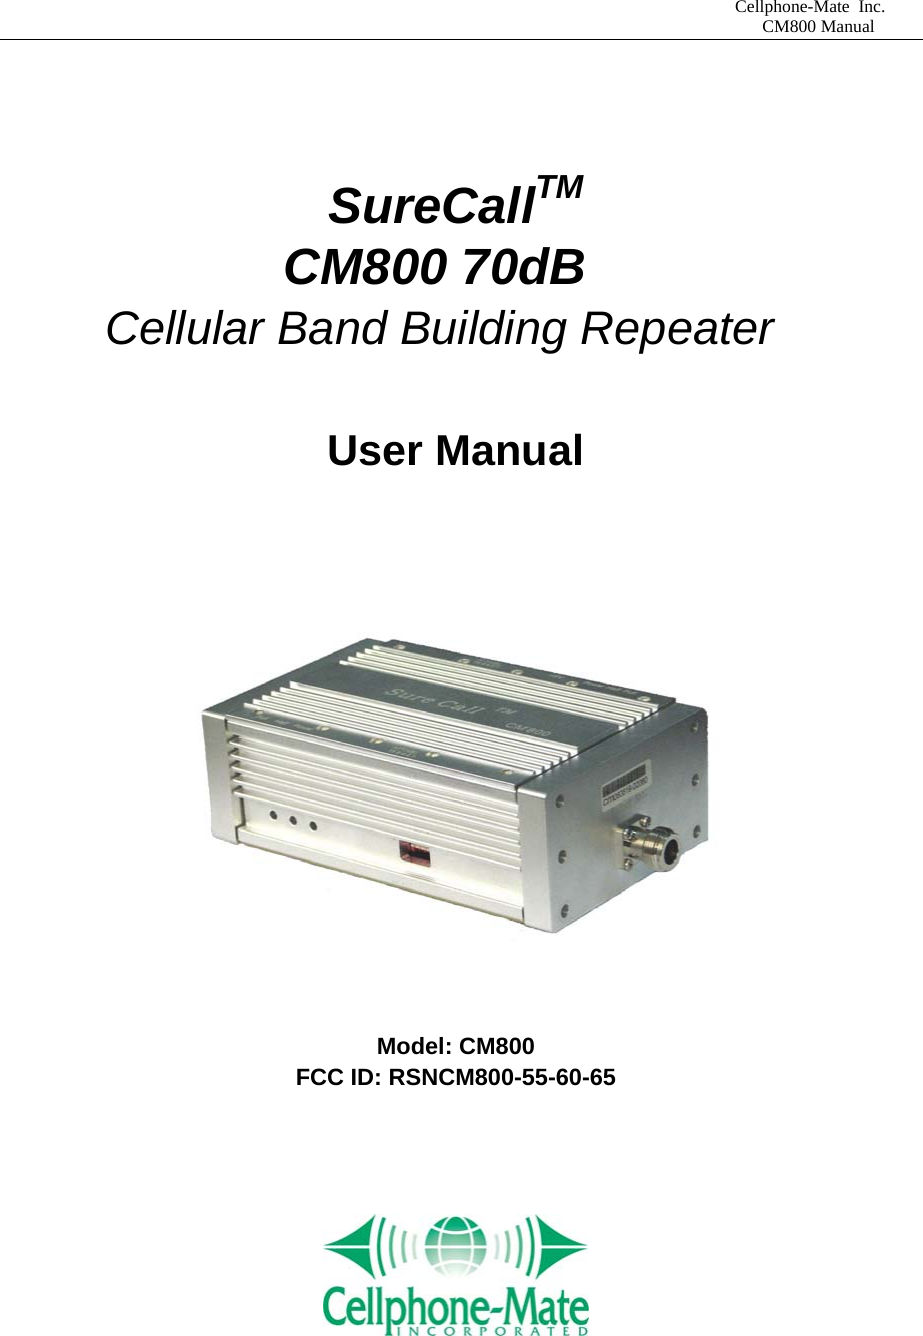                             Cellphone-Mate Inc.                                                                                  CM800 Manual   SureCallTM            CM800 70dB     Cellular Band Building Repeater  User Manual     Model: CM800 FCC ID: RSNCM800-55-60-65        